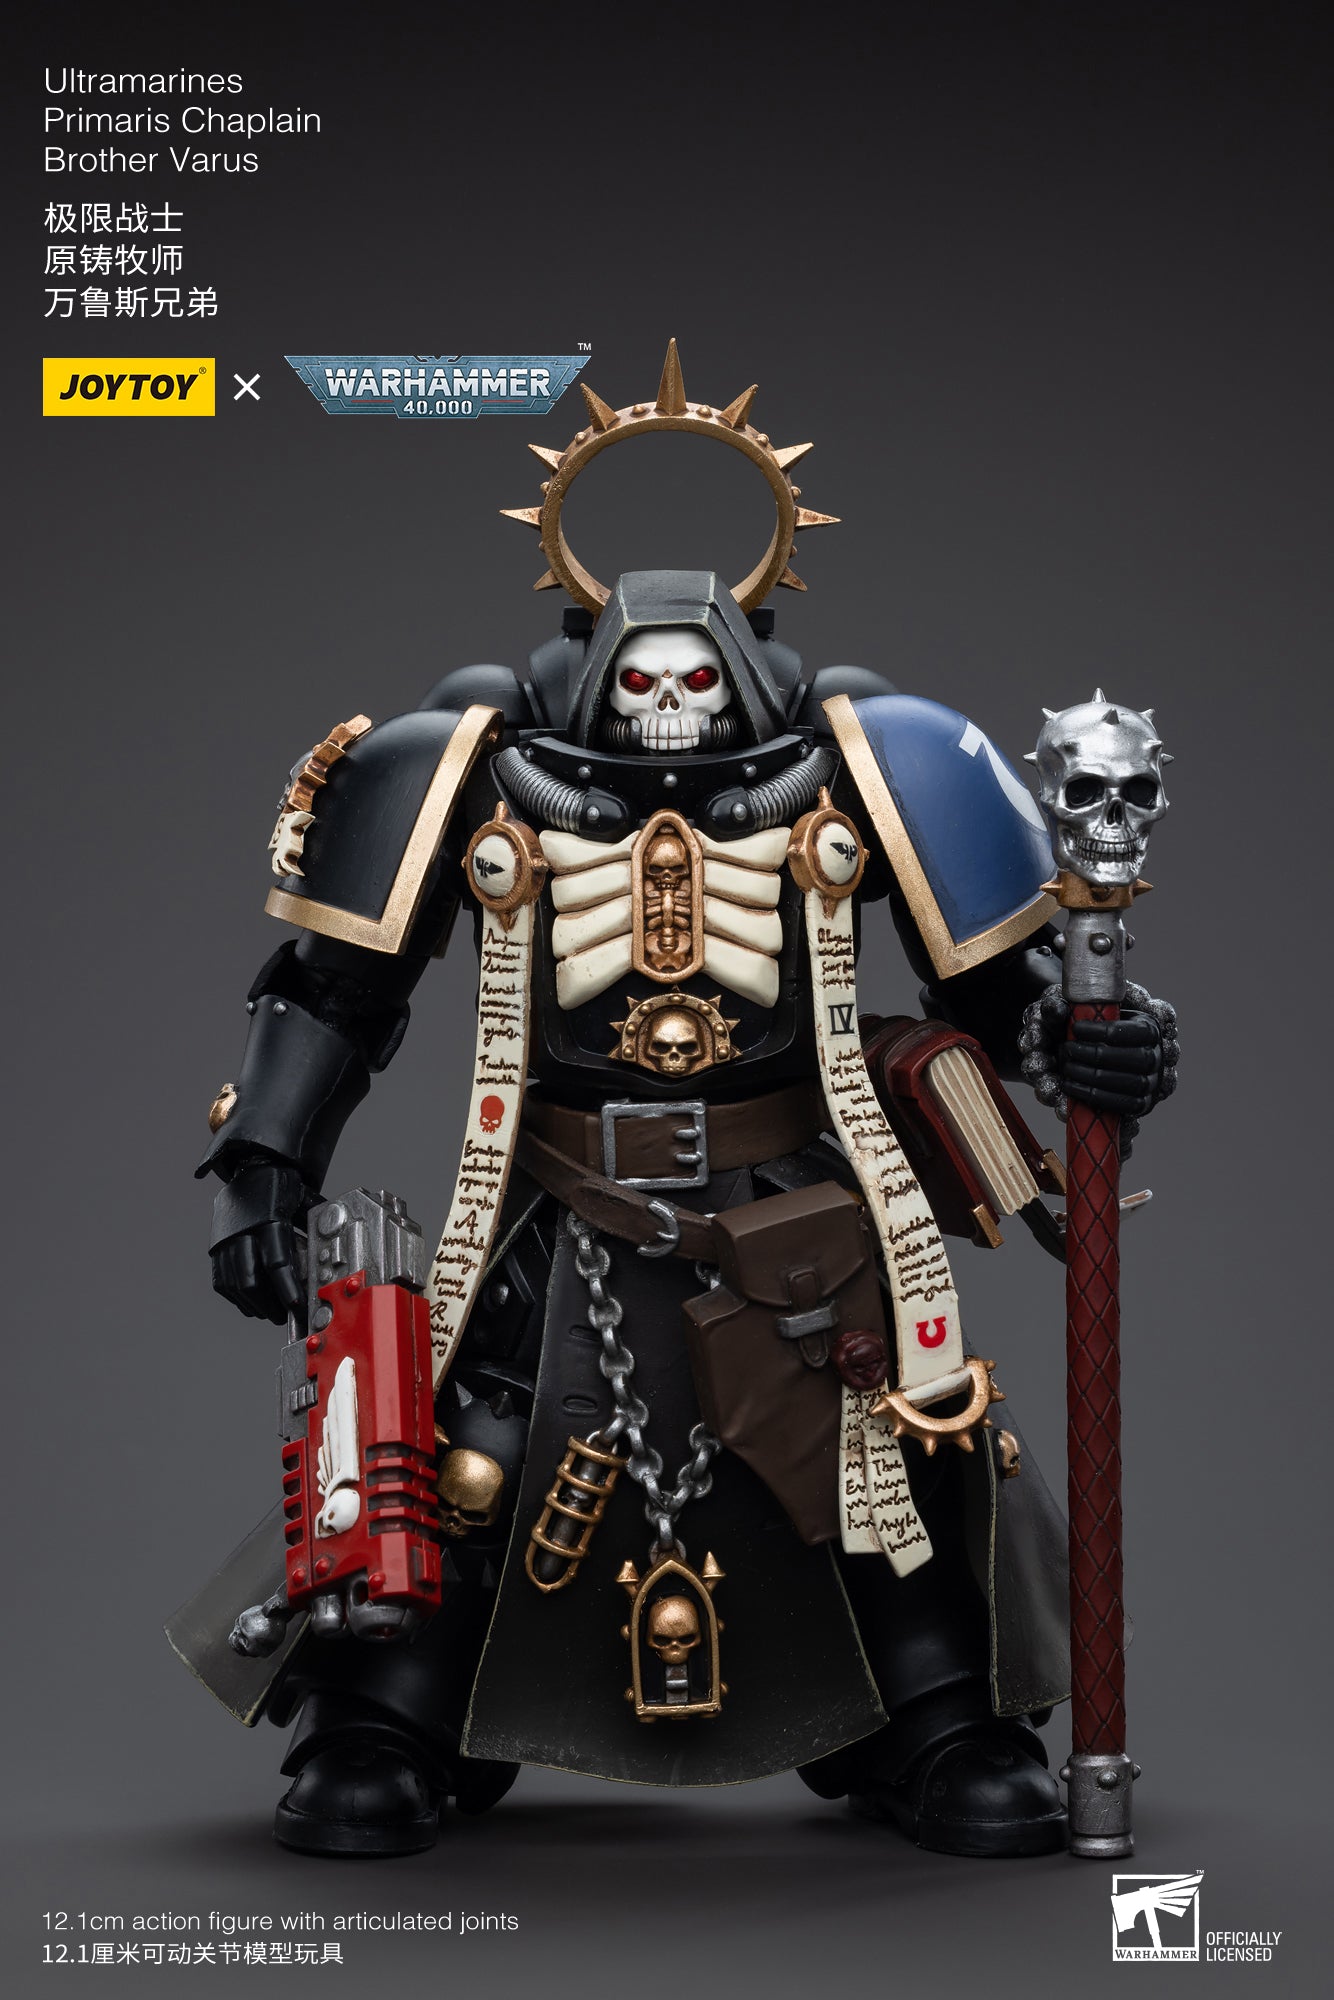 Ultramarines Primaris Chaplain Brother Varus - Warhammer 40K Action Figure By JOYTOY